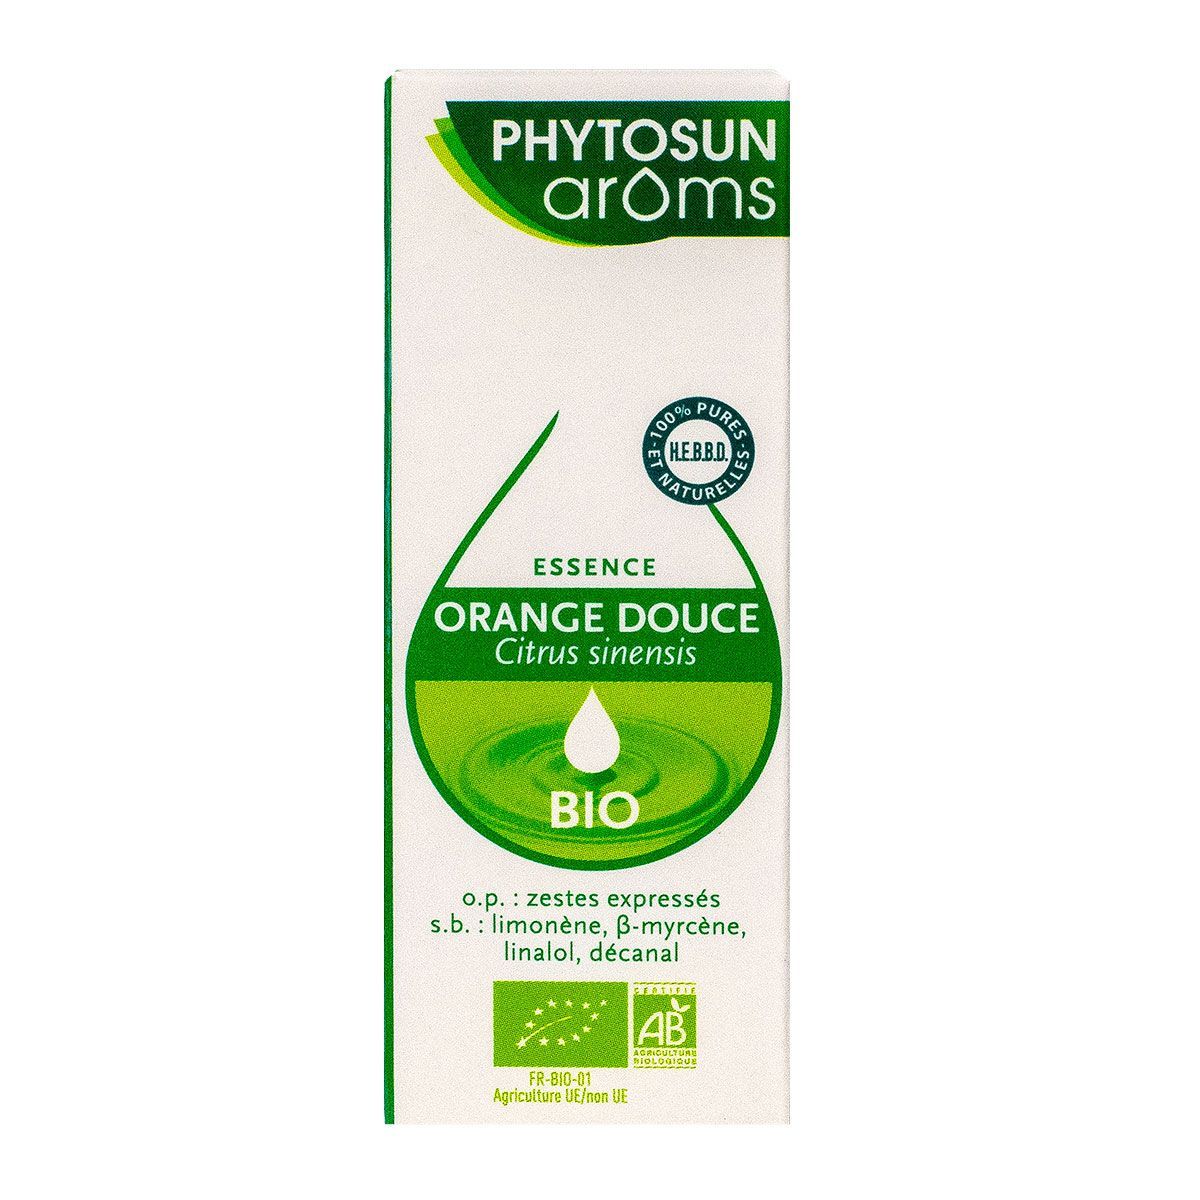 huile essentielle d'orange douce bio 10 ml certifiée pure et naturelle